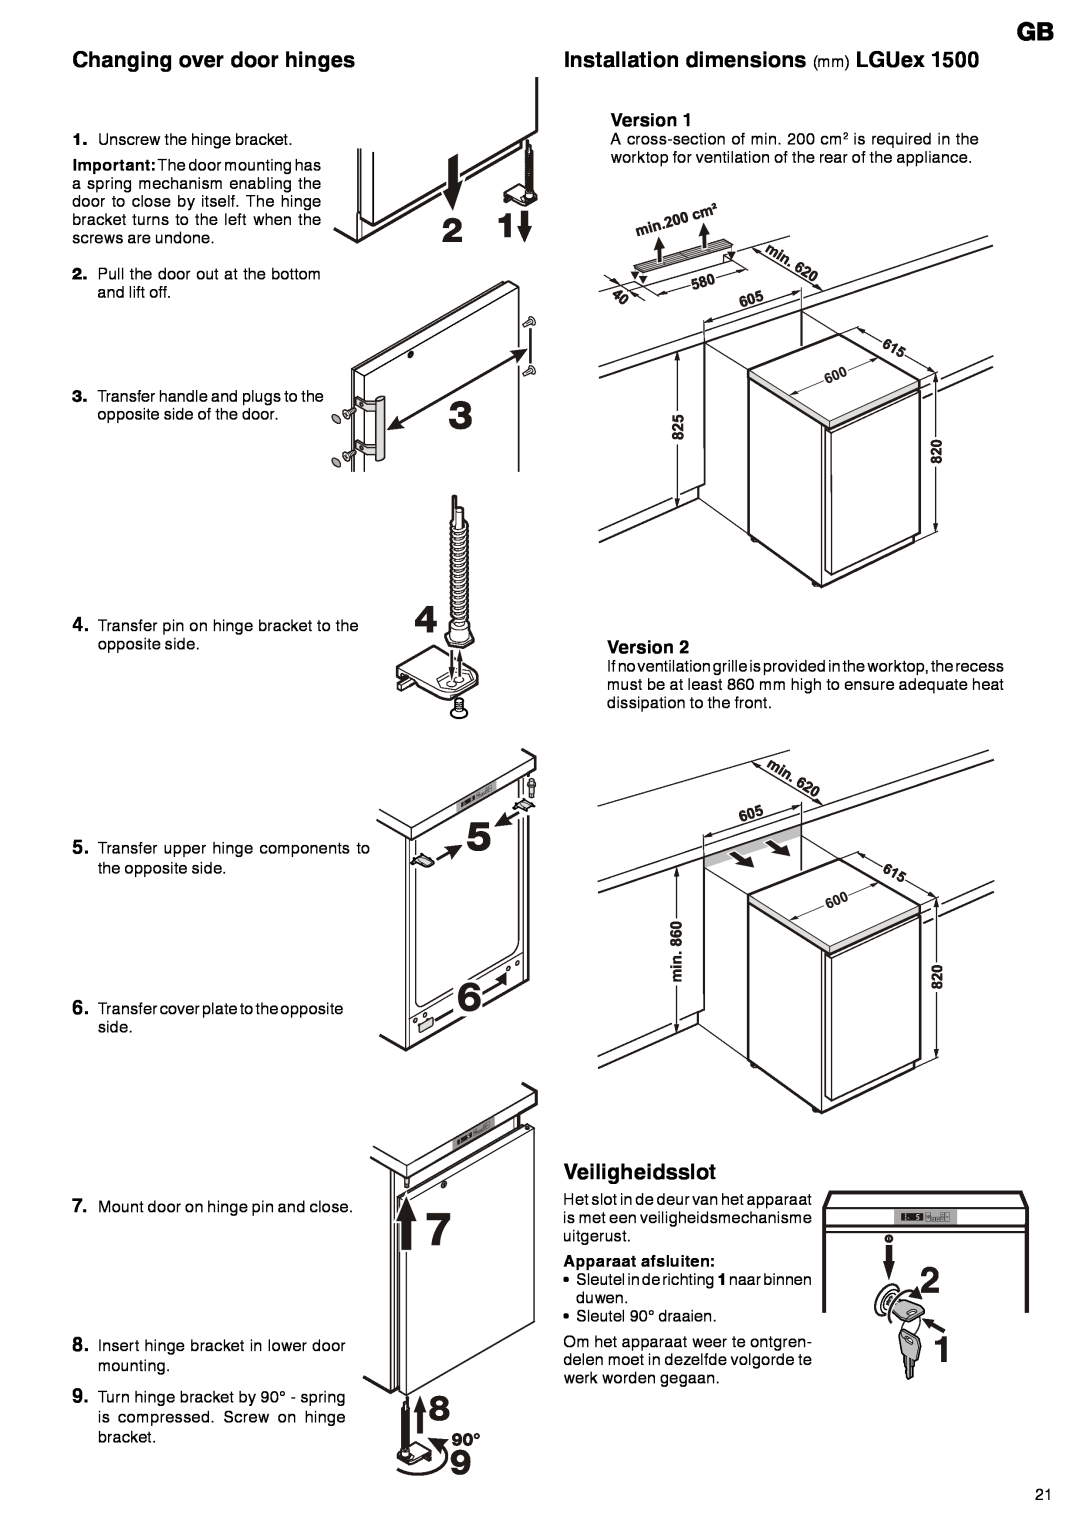 Liebherr LGex 910 manual Changing over door hinges, Installation dimensions mm LGUex, Veiligheidsslot, Version 